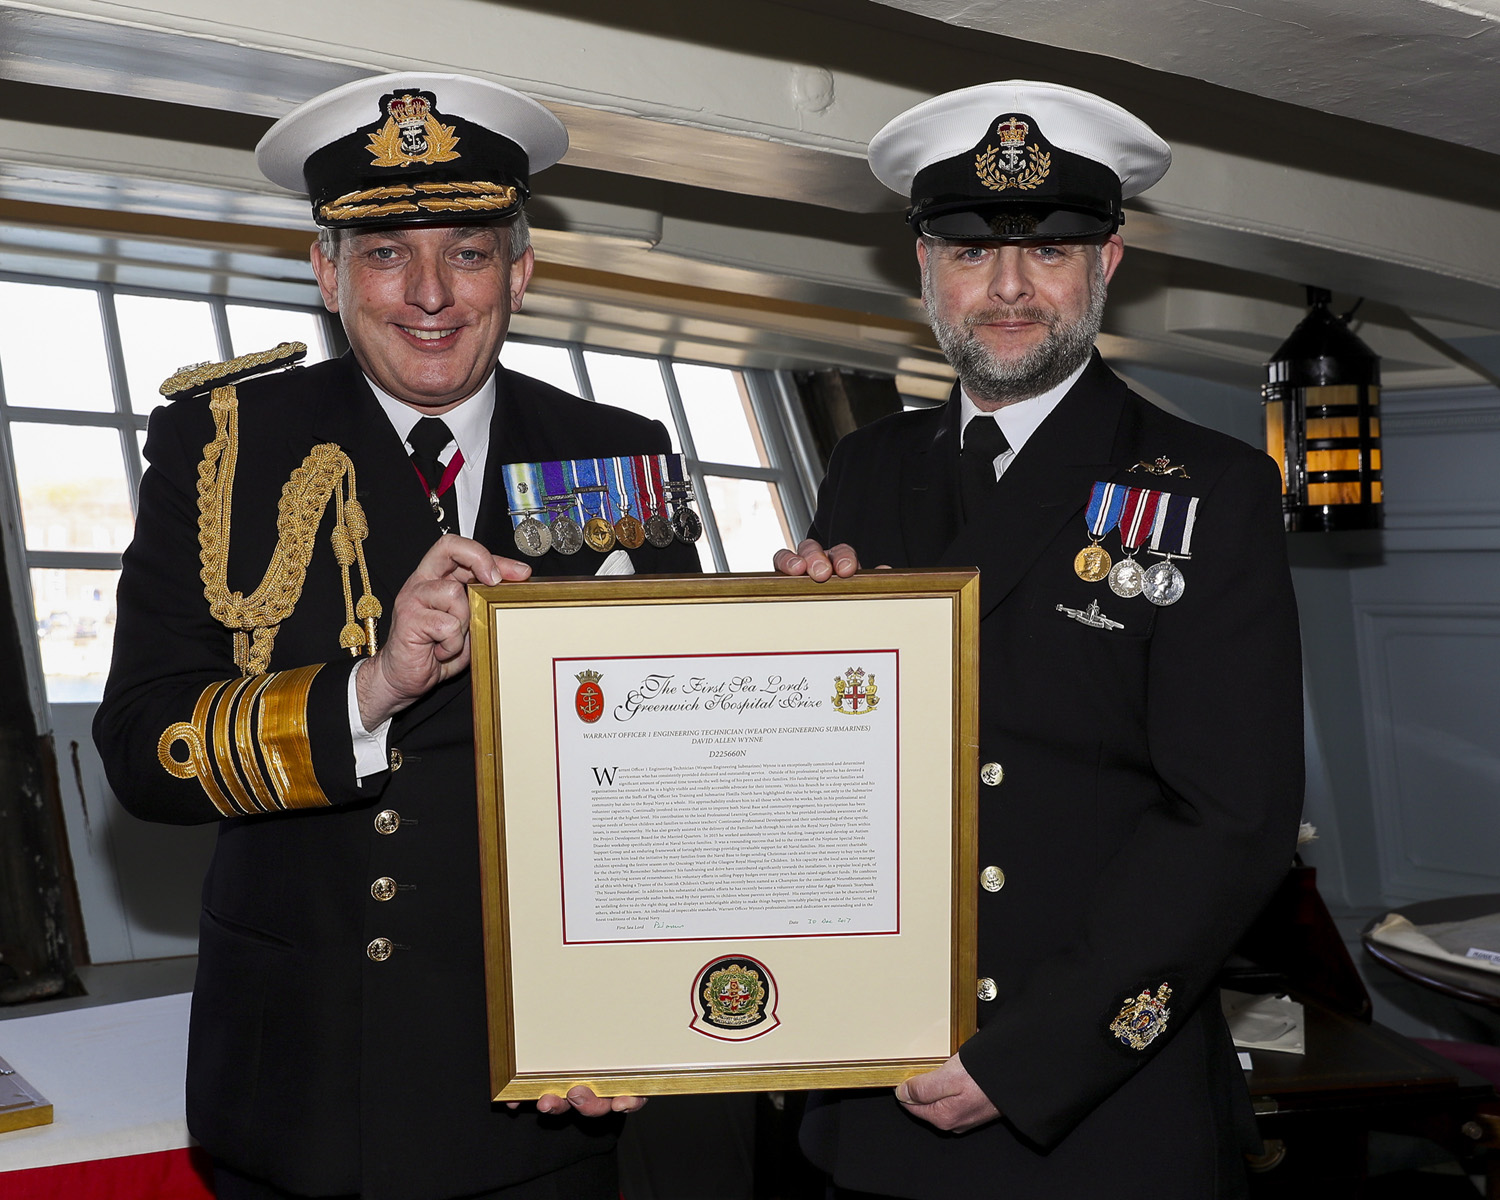 Royal Navy honours stalwarts of the service | Royal Navy